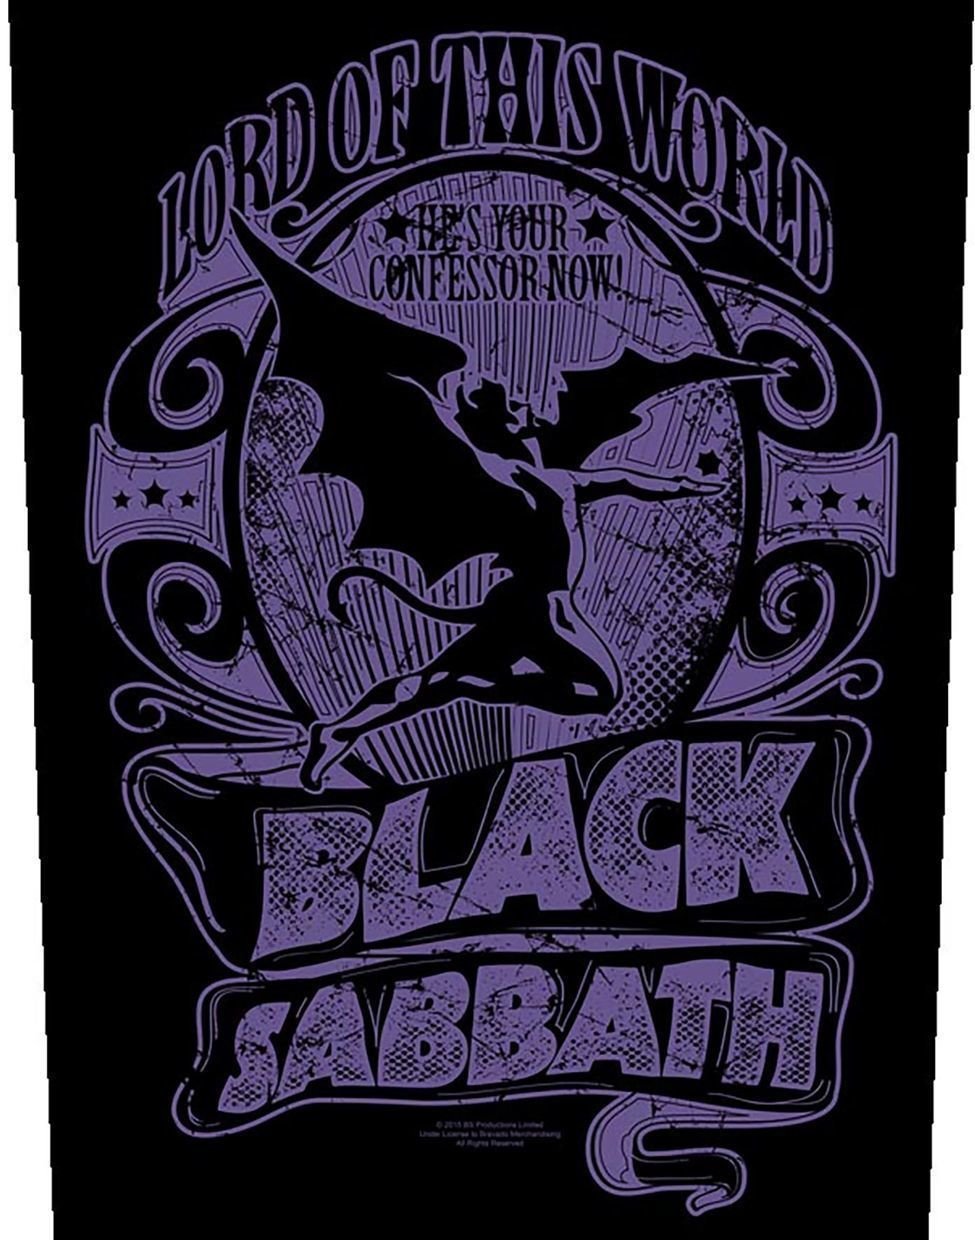 Correctif Black Sabbath Lord Of This World Correctif